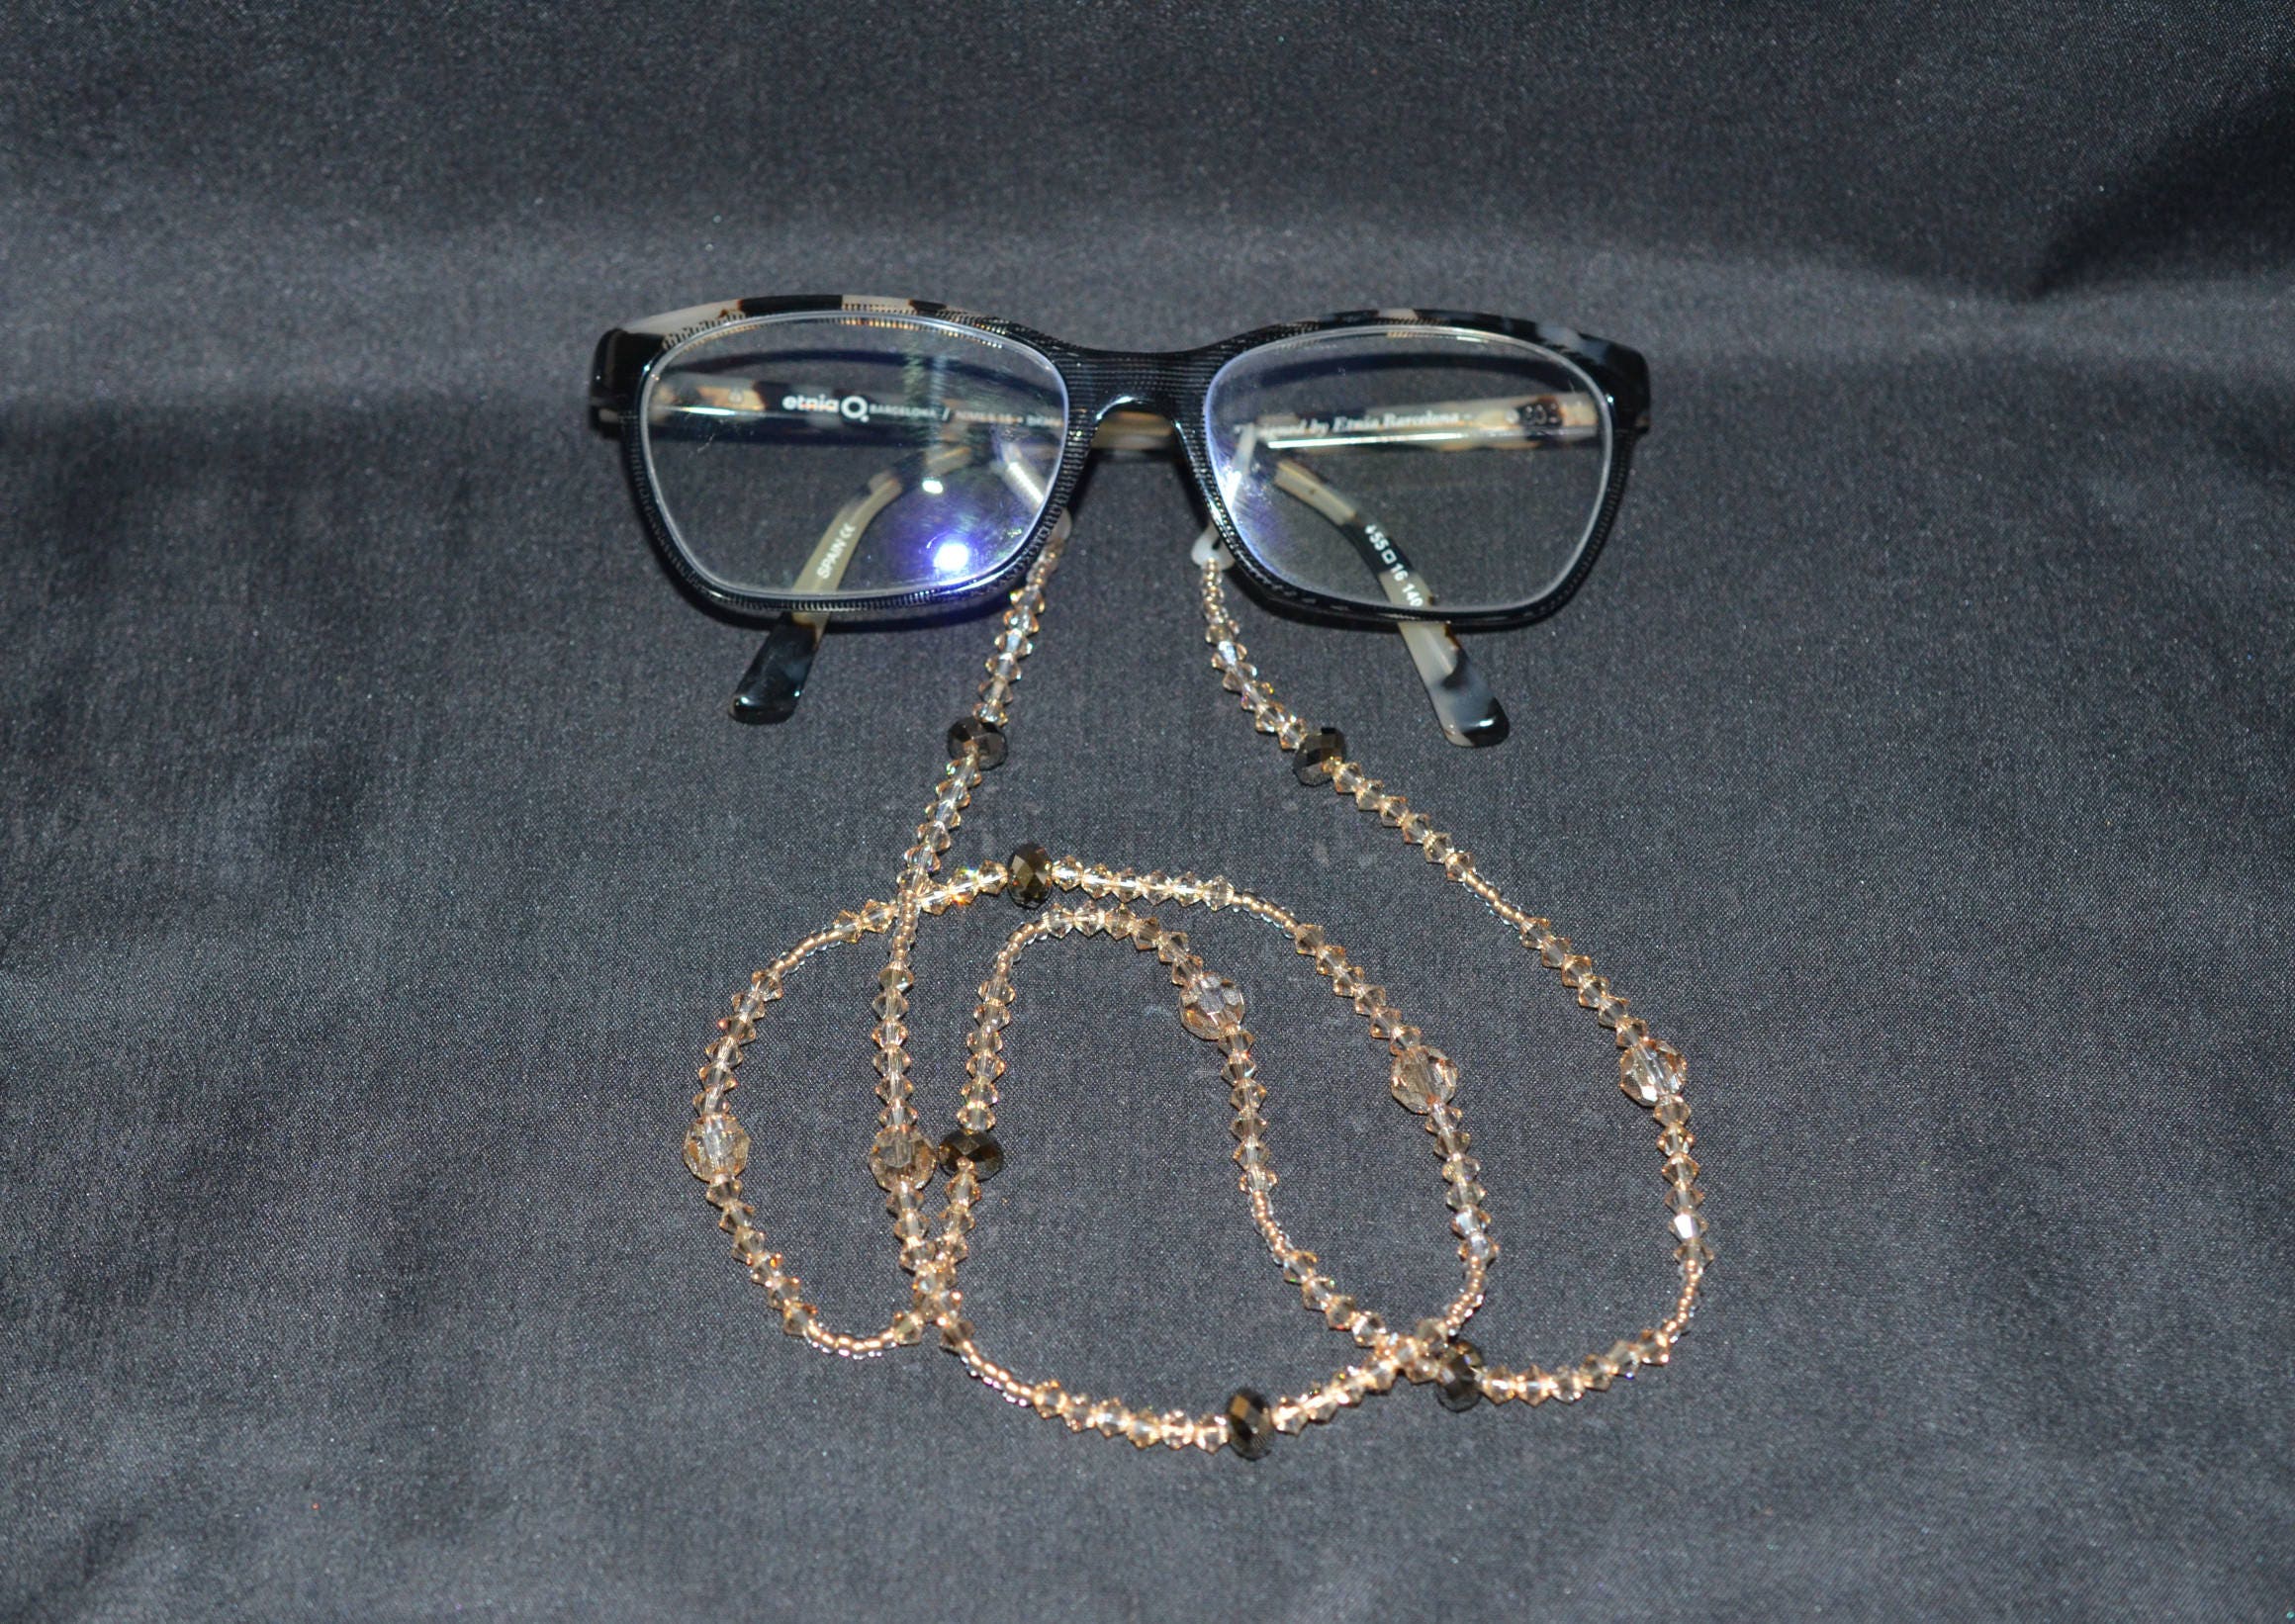 Glasses Chain Decorative Chain Suitable For Men And Women, Glasses